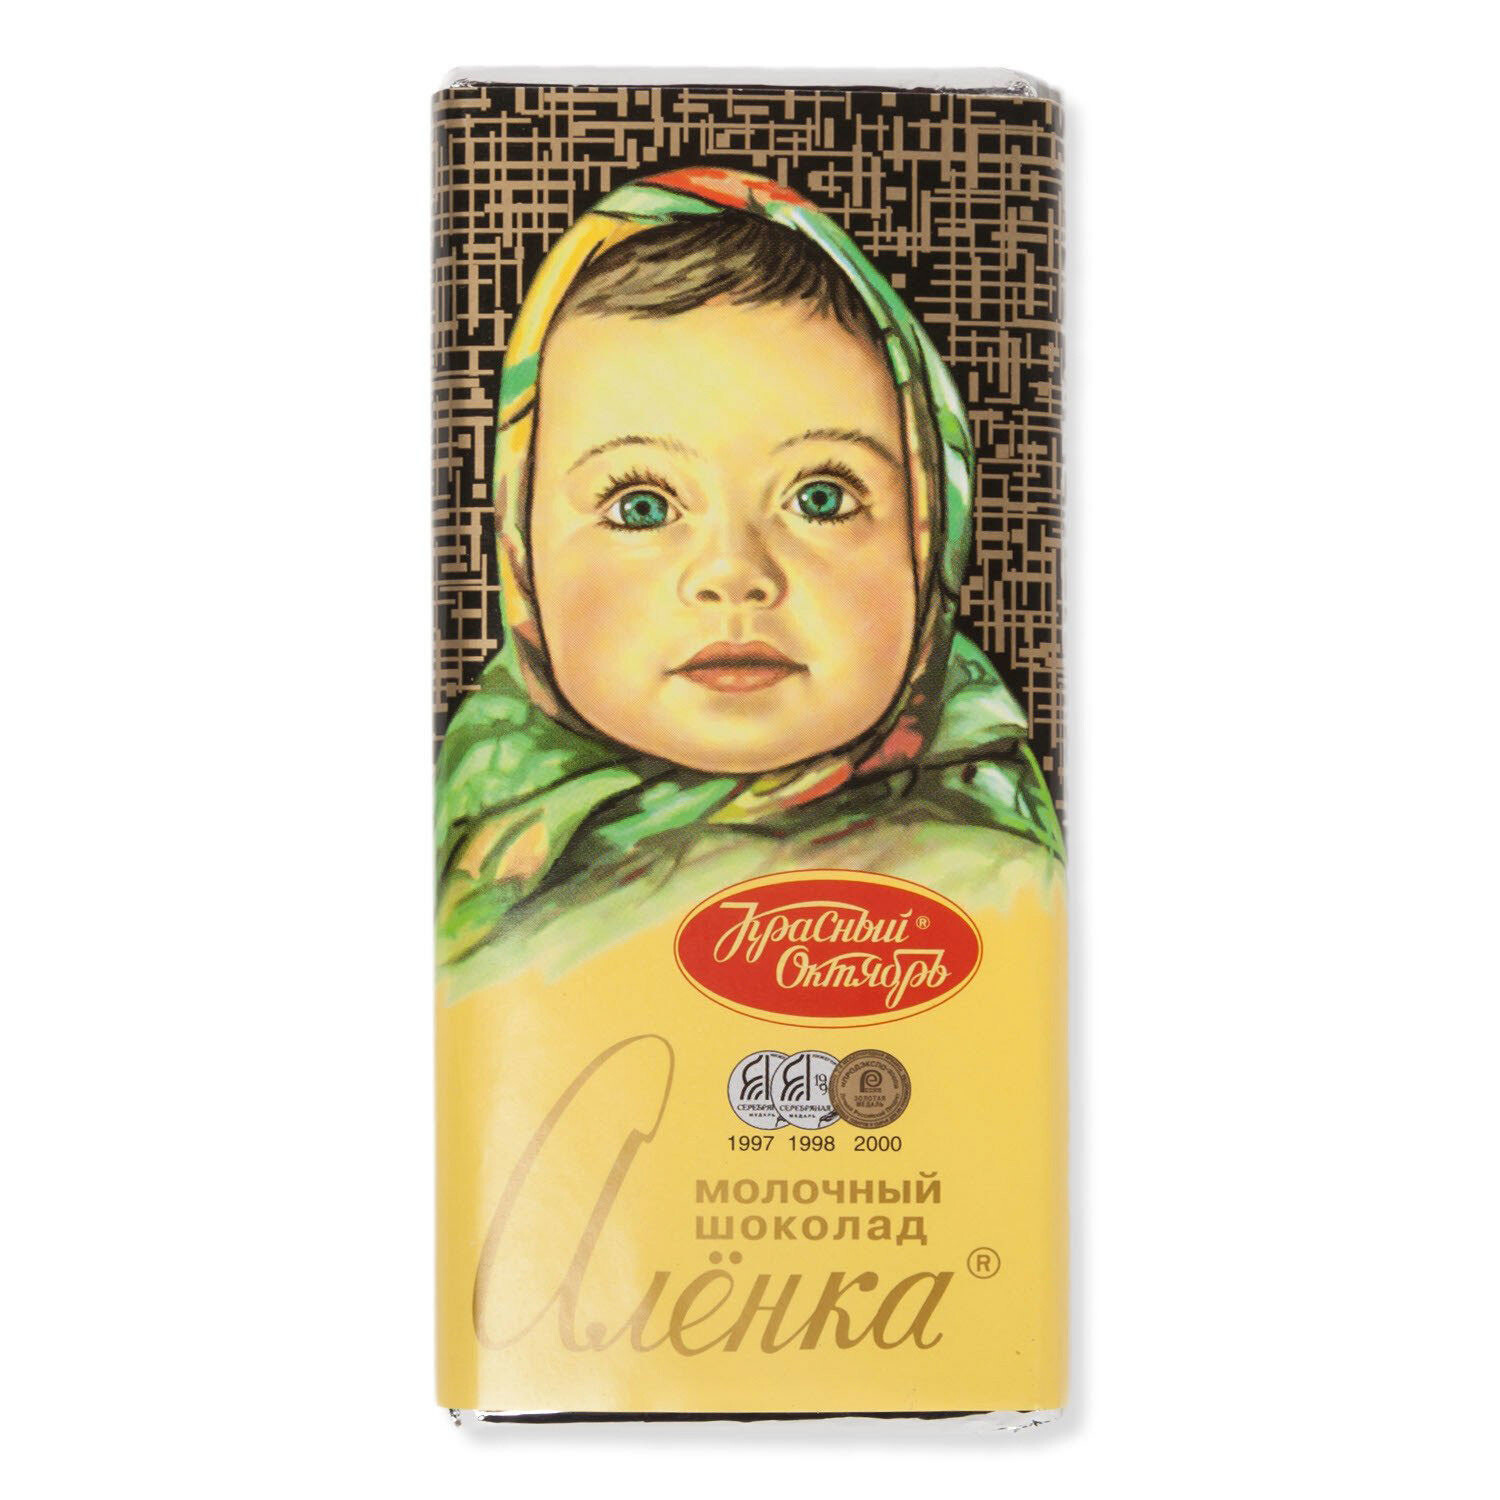 Russian milk chocolate 'Alionka'.